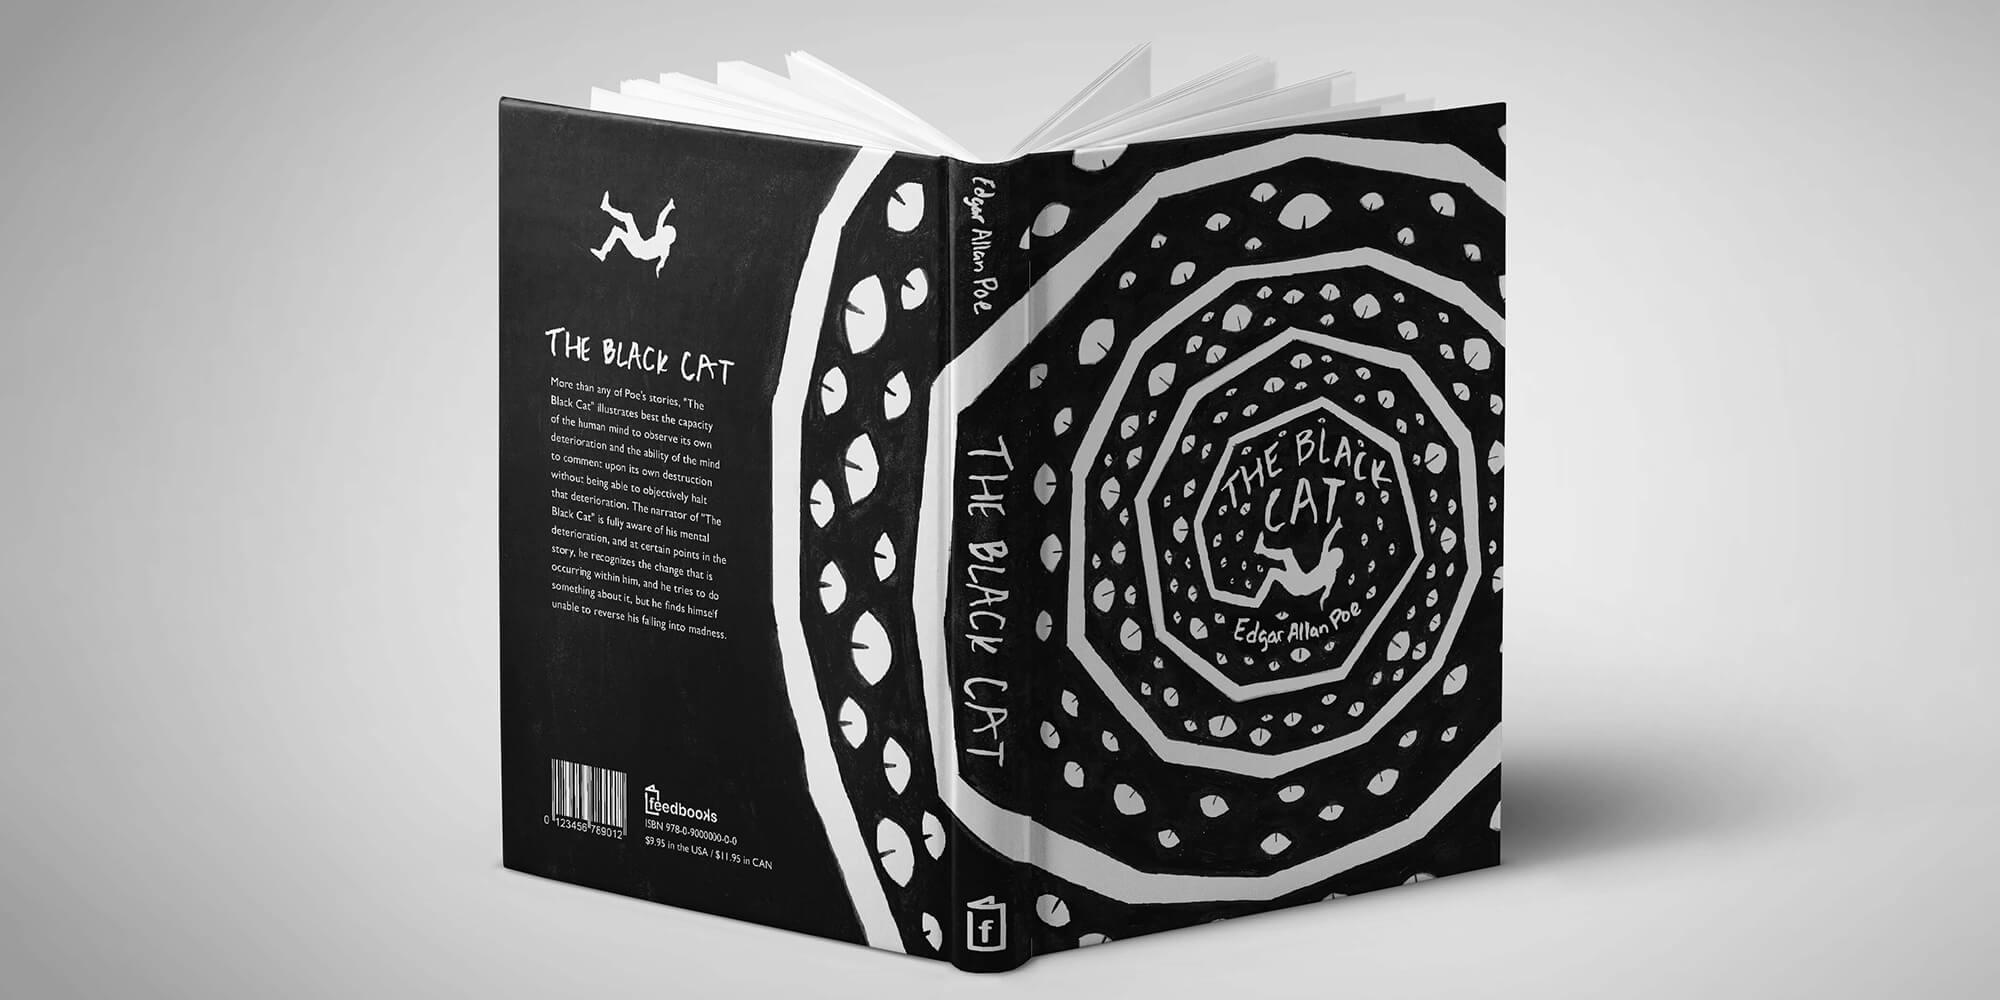 The Black Cat book cover